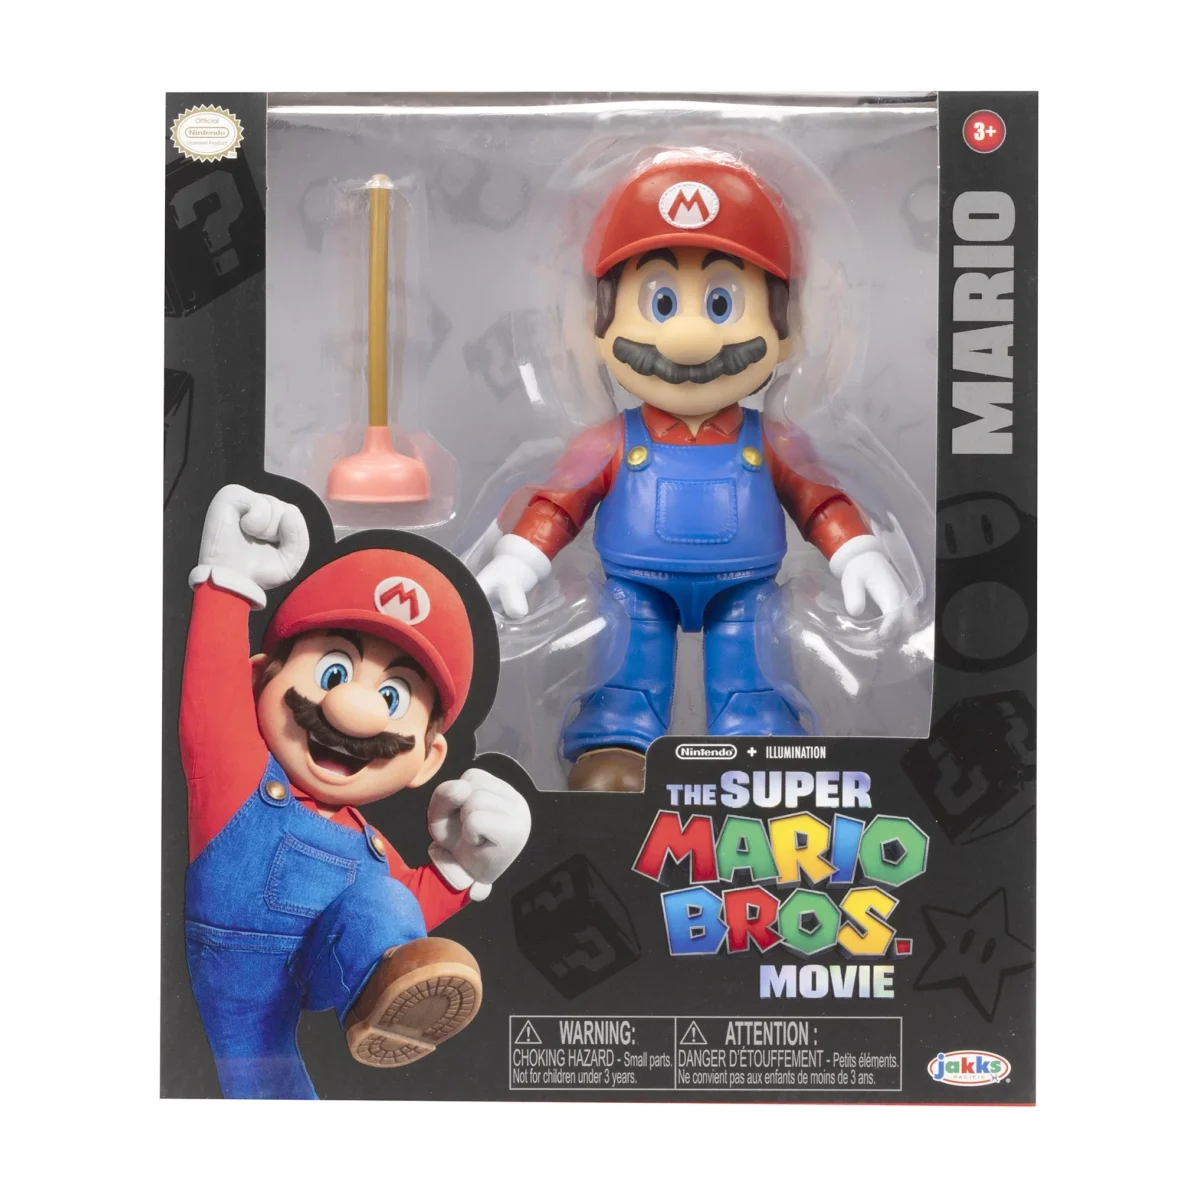 The Super Mario Bros. Movie 5 inch Mario Figure with Plunger Accessory (Copy)